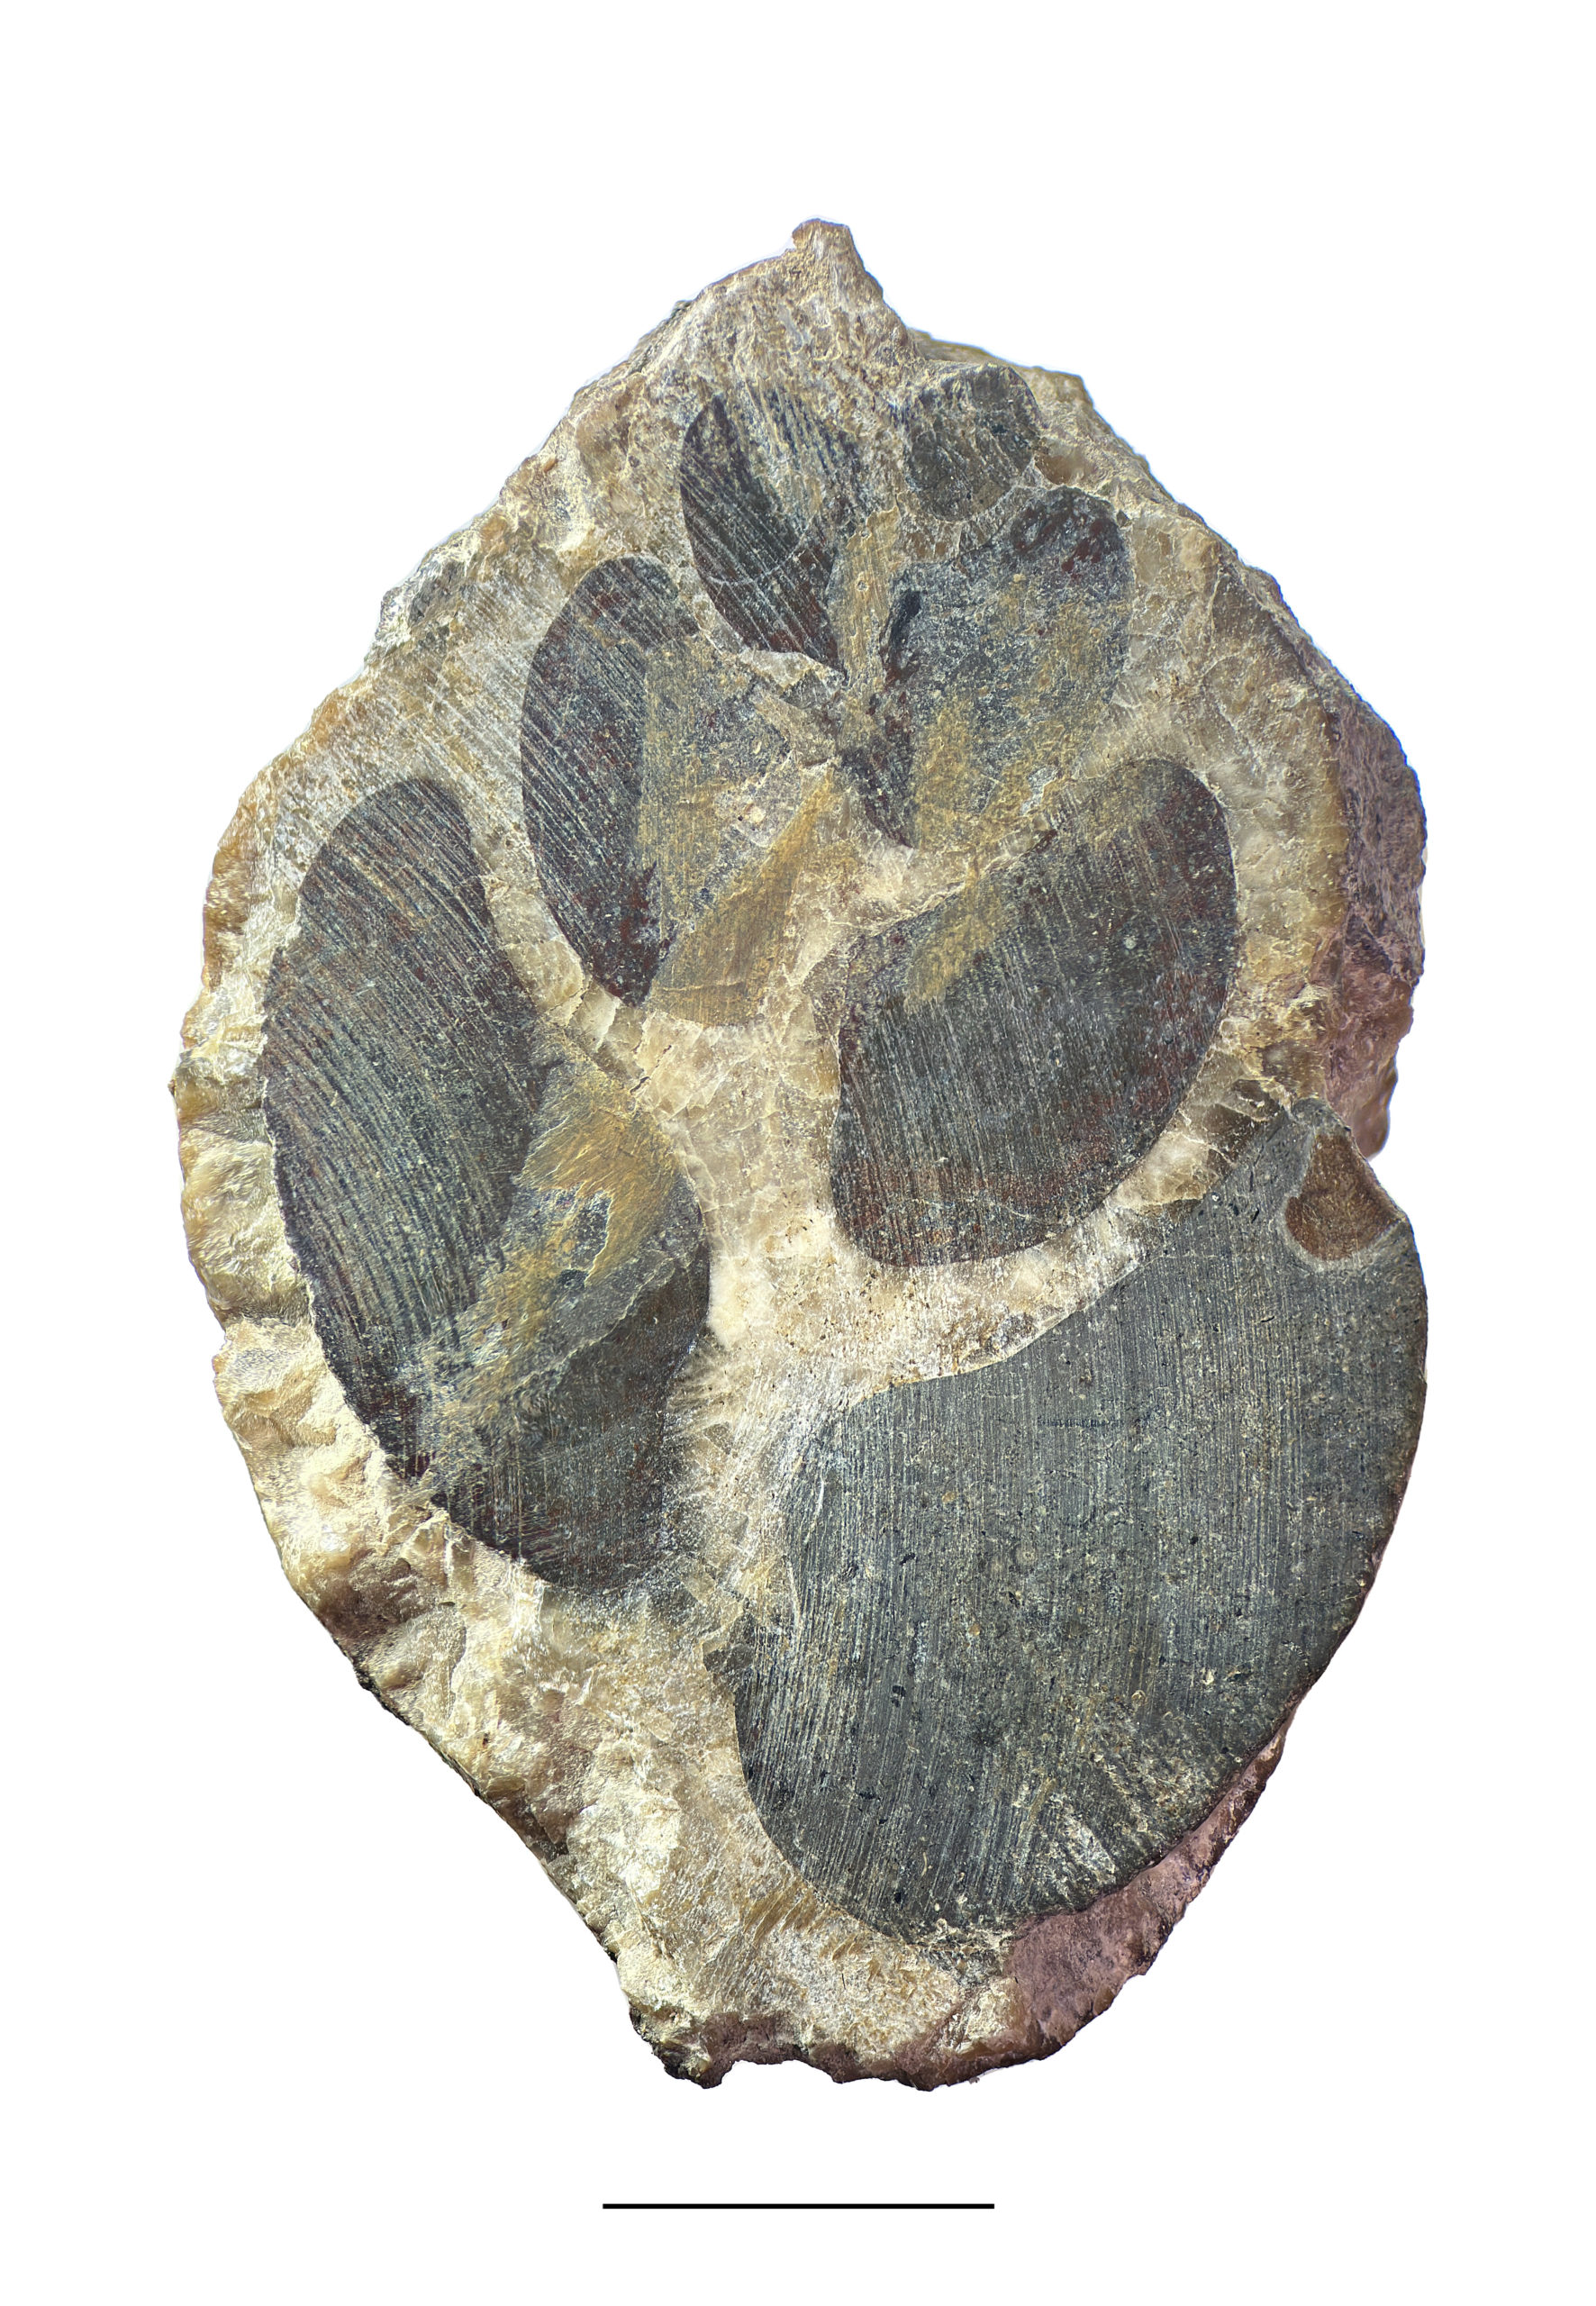 Figure 2—A cut and polished specimen of Strobeus primogenius.